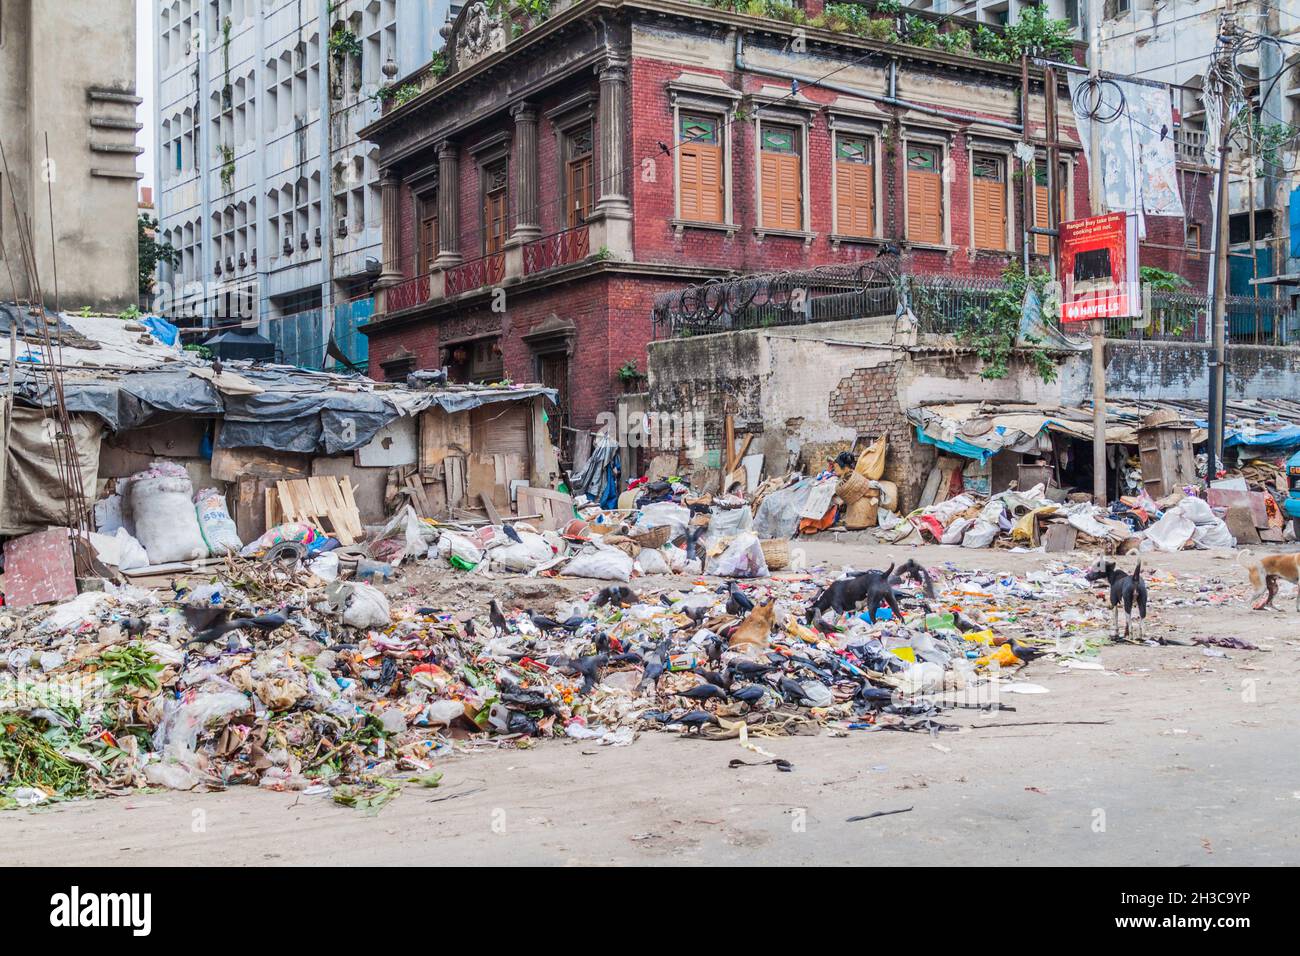 KOLKATA, INDIA - OCTOBER 31, 2016: Trash covered street in the center of Kolkata, India Stock Photo